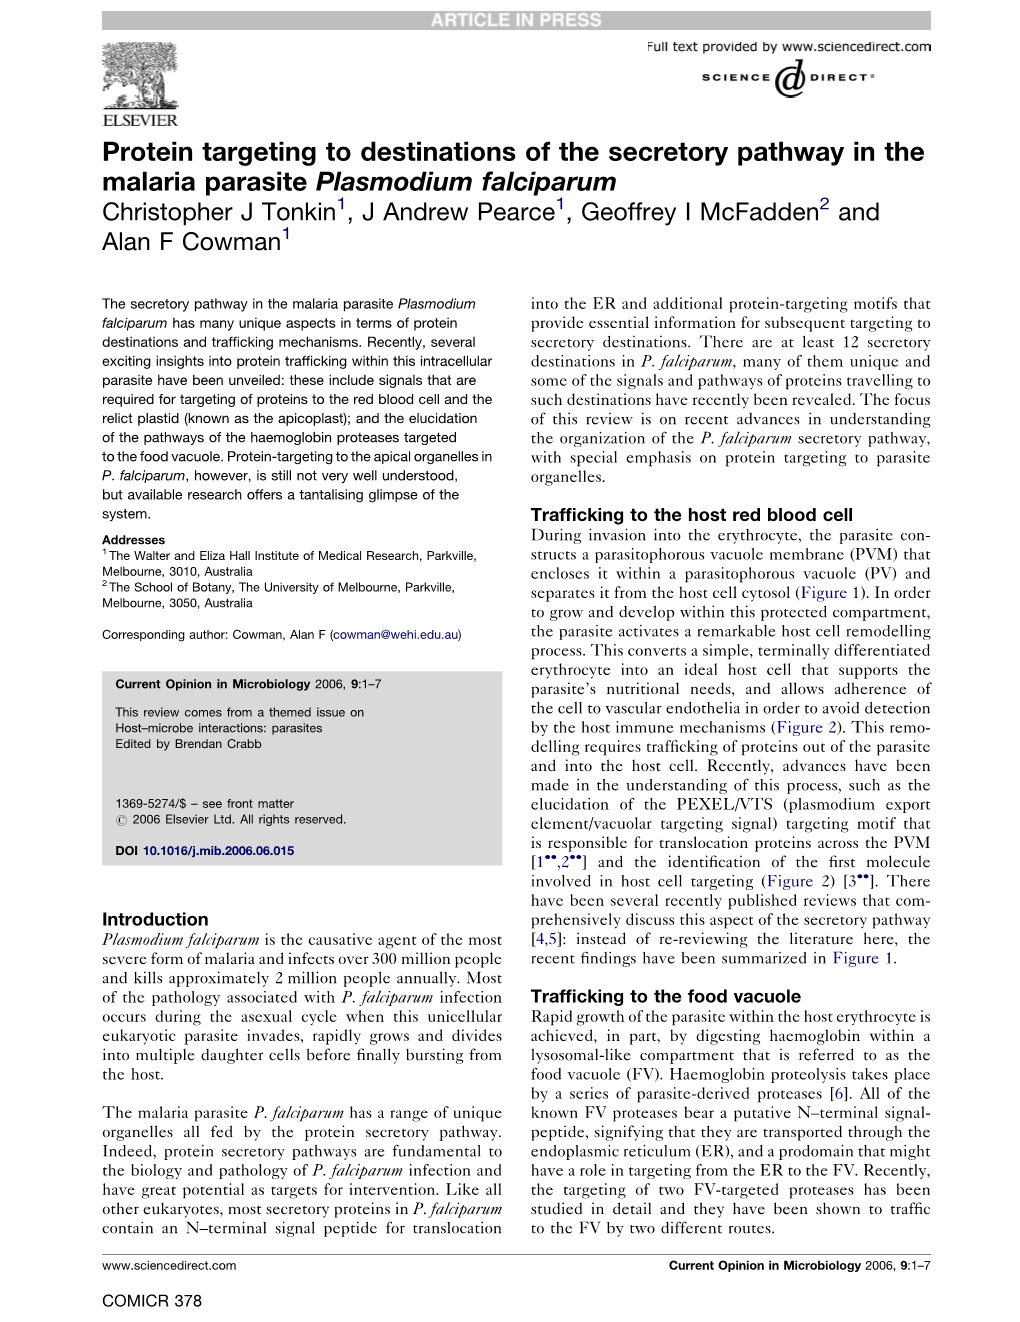 Protein Targeting to Destinations of the Secretory Pathway in the Malaria Parasite Plasmodium Falciparum